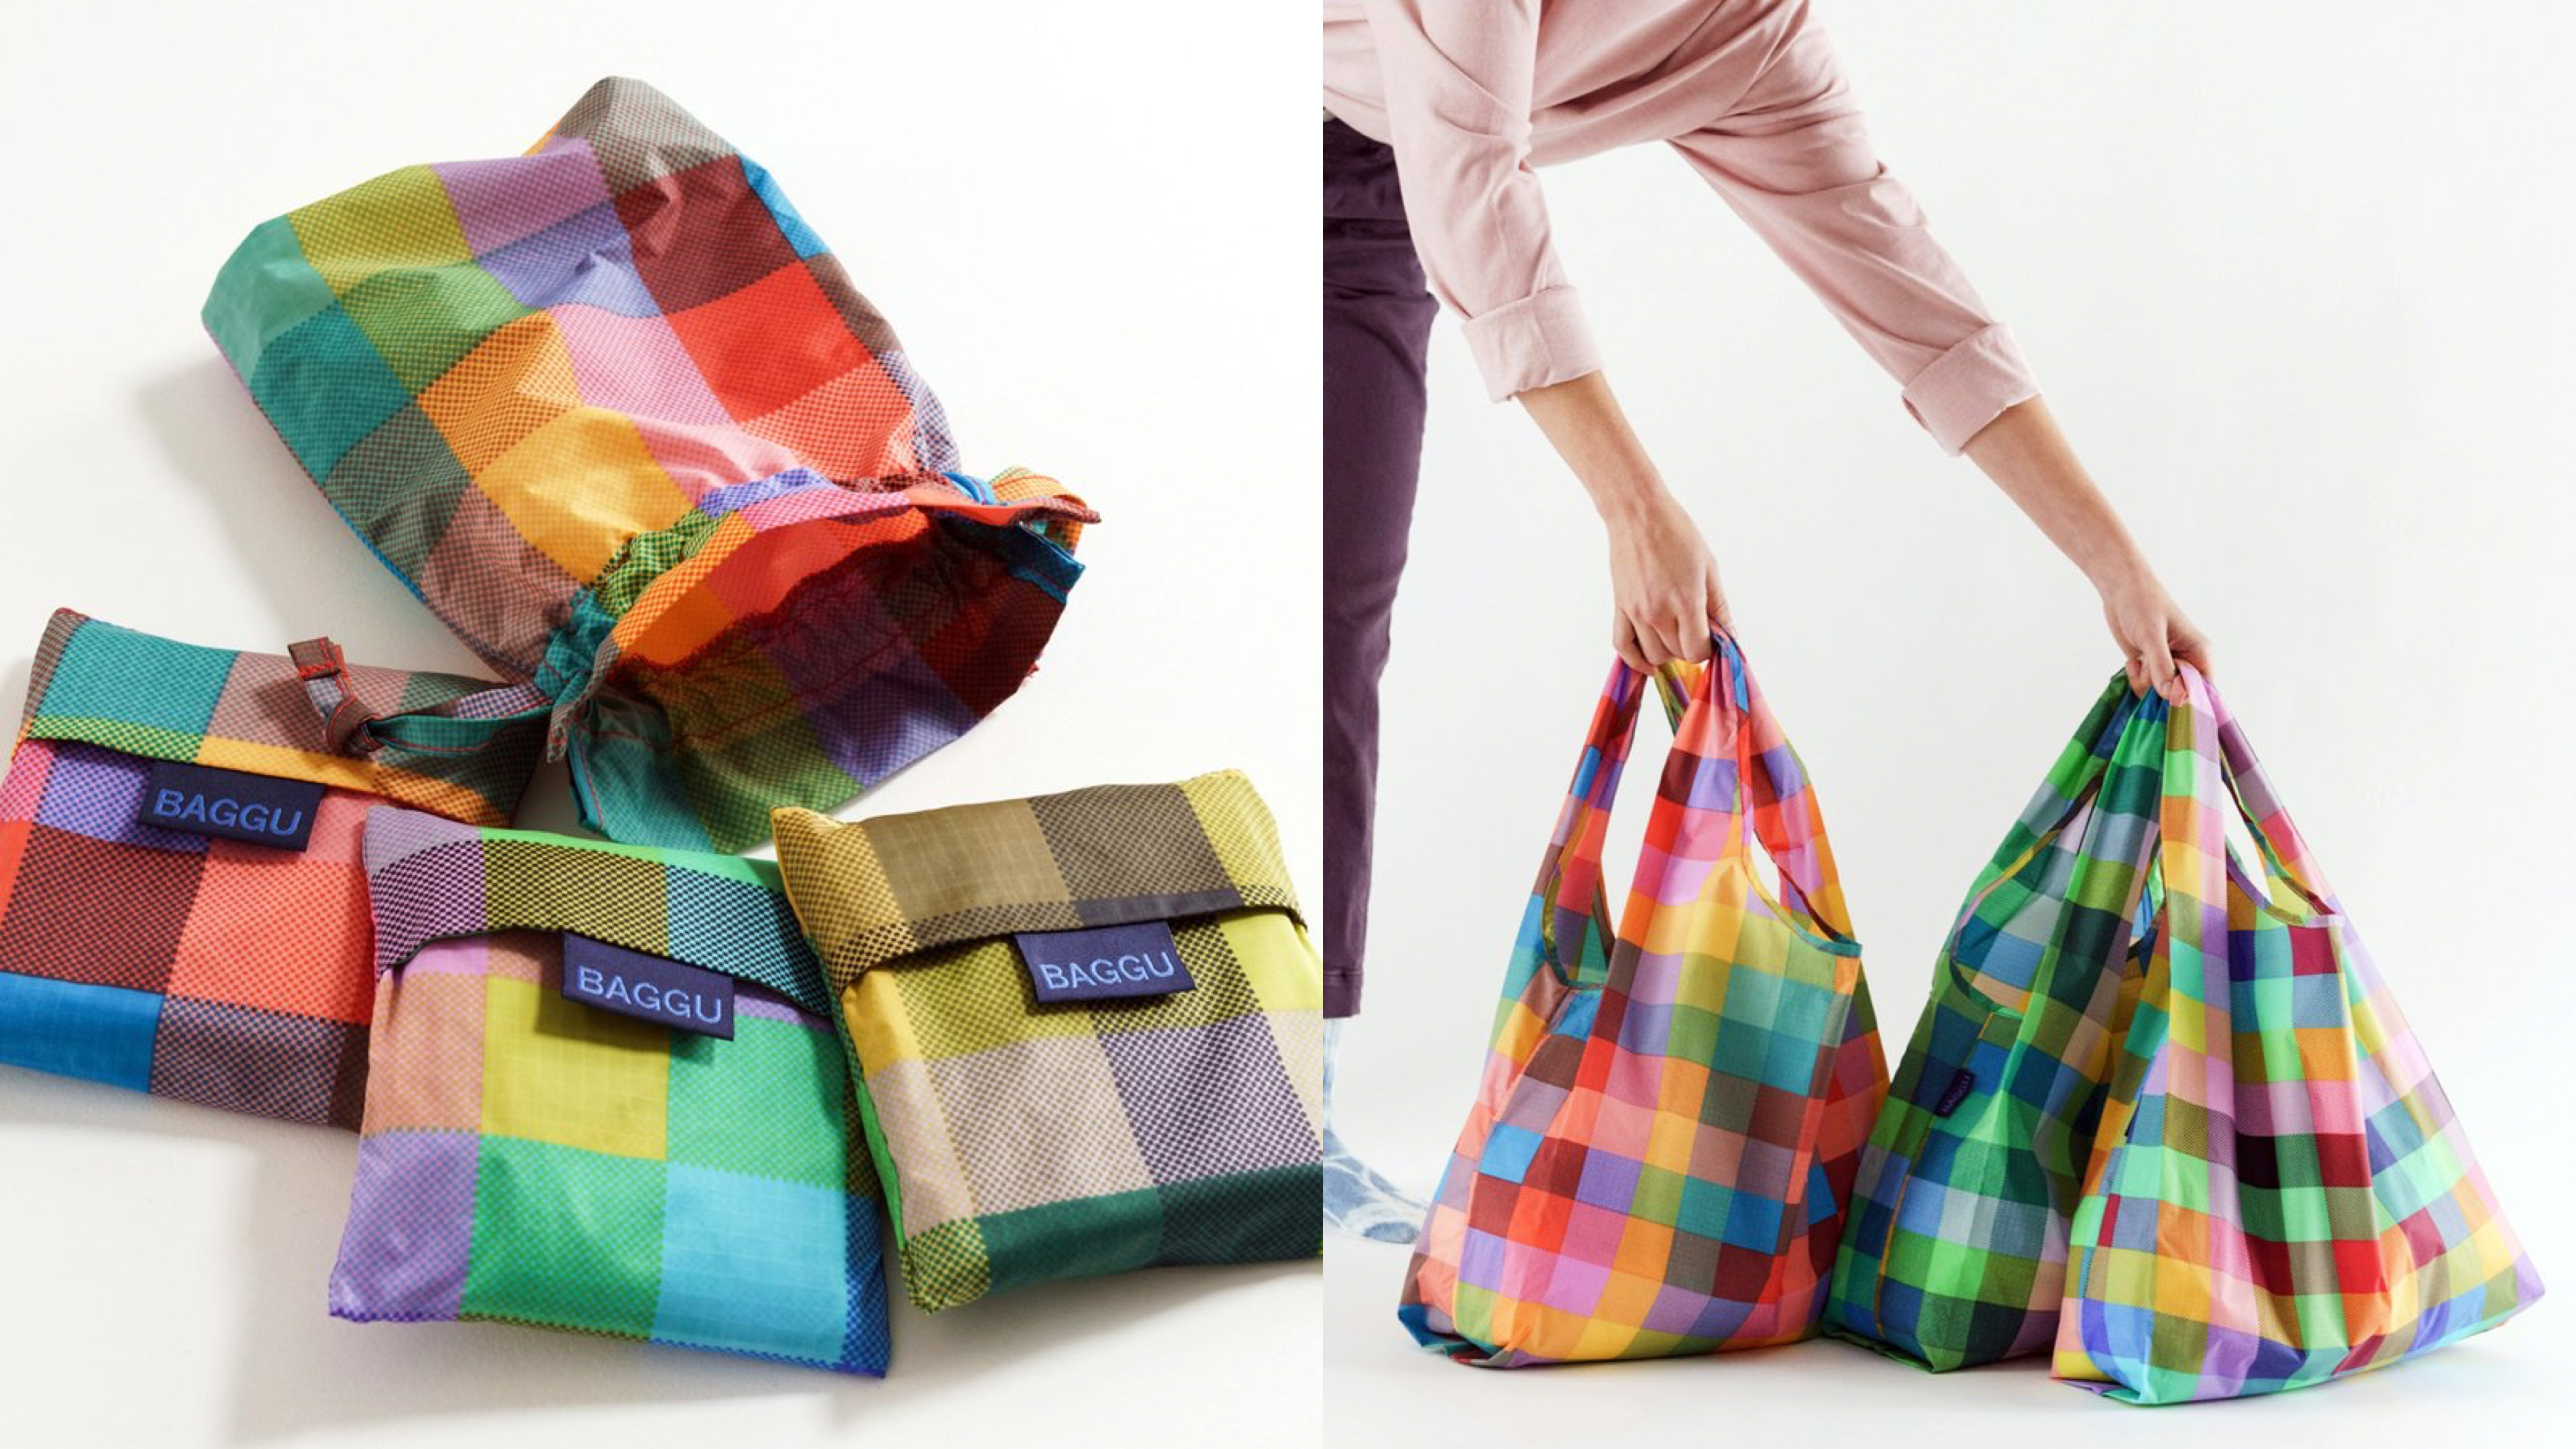 nylon reusable bags that won't rip